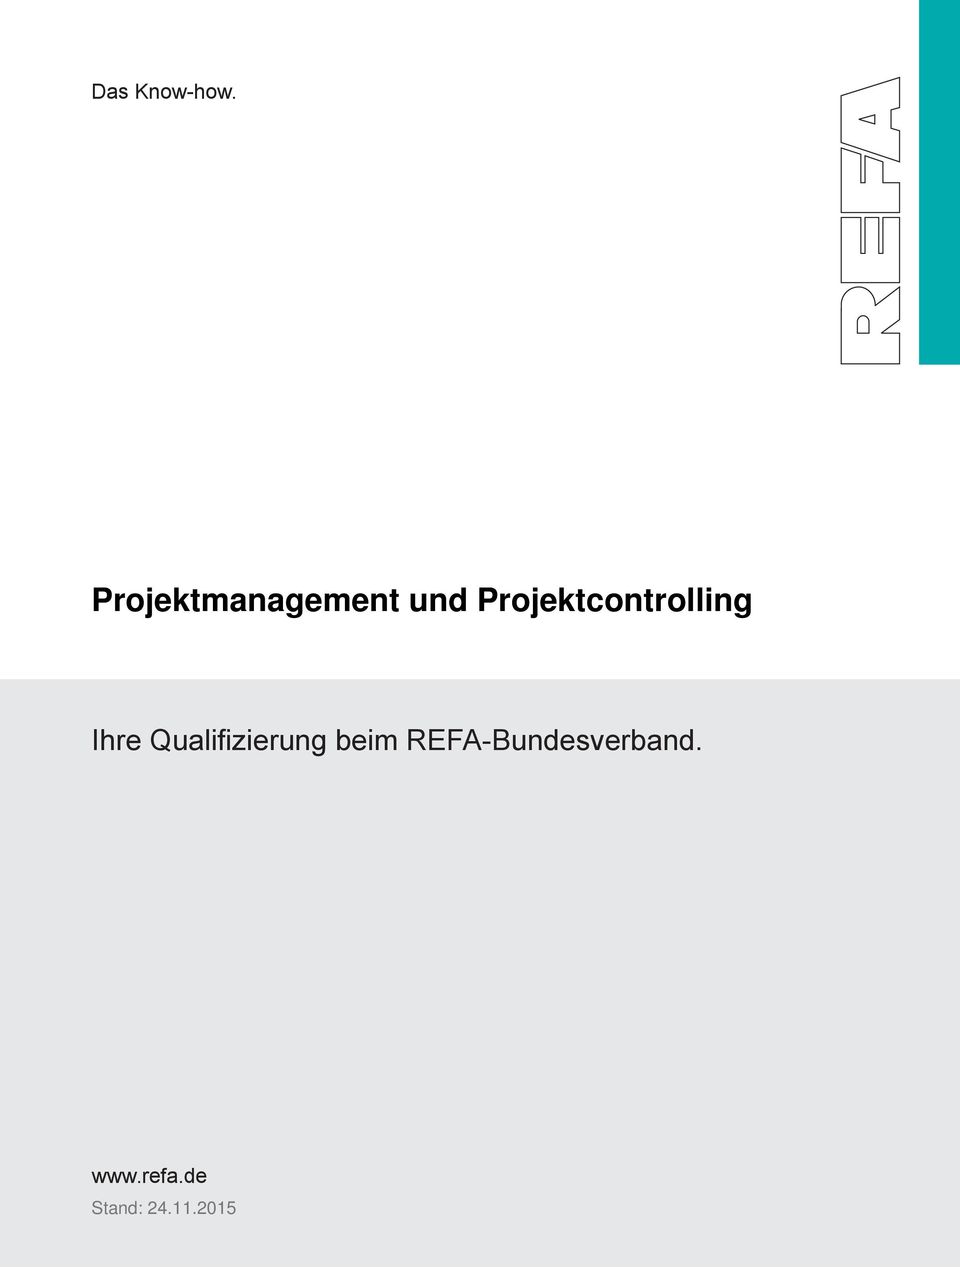 REFA-Bundesverband.